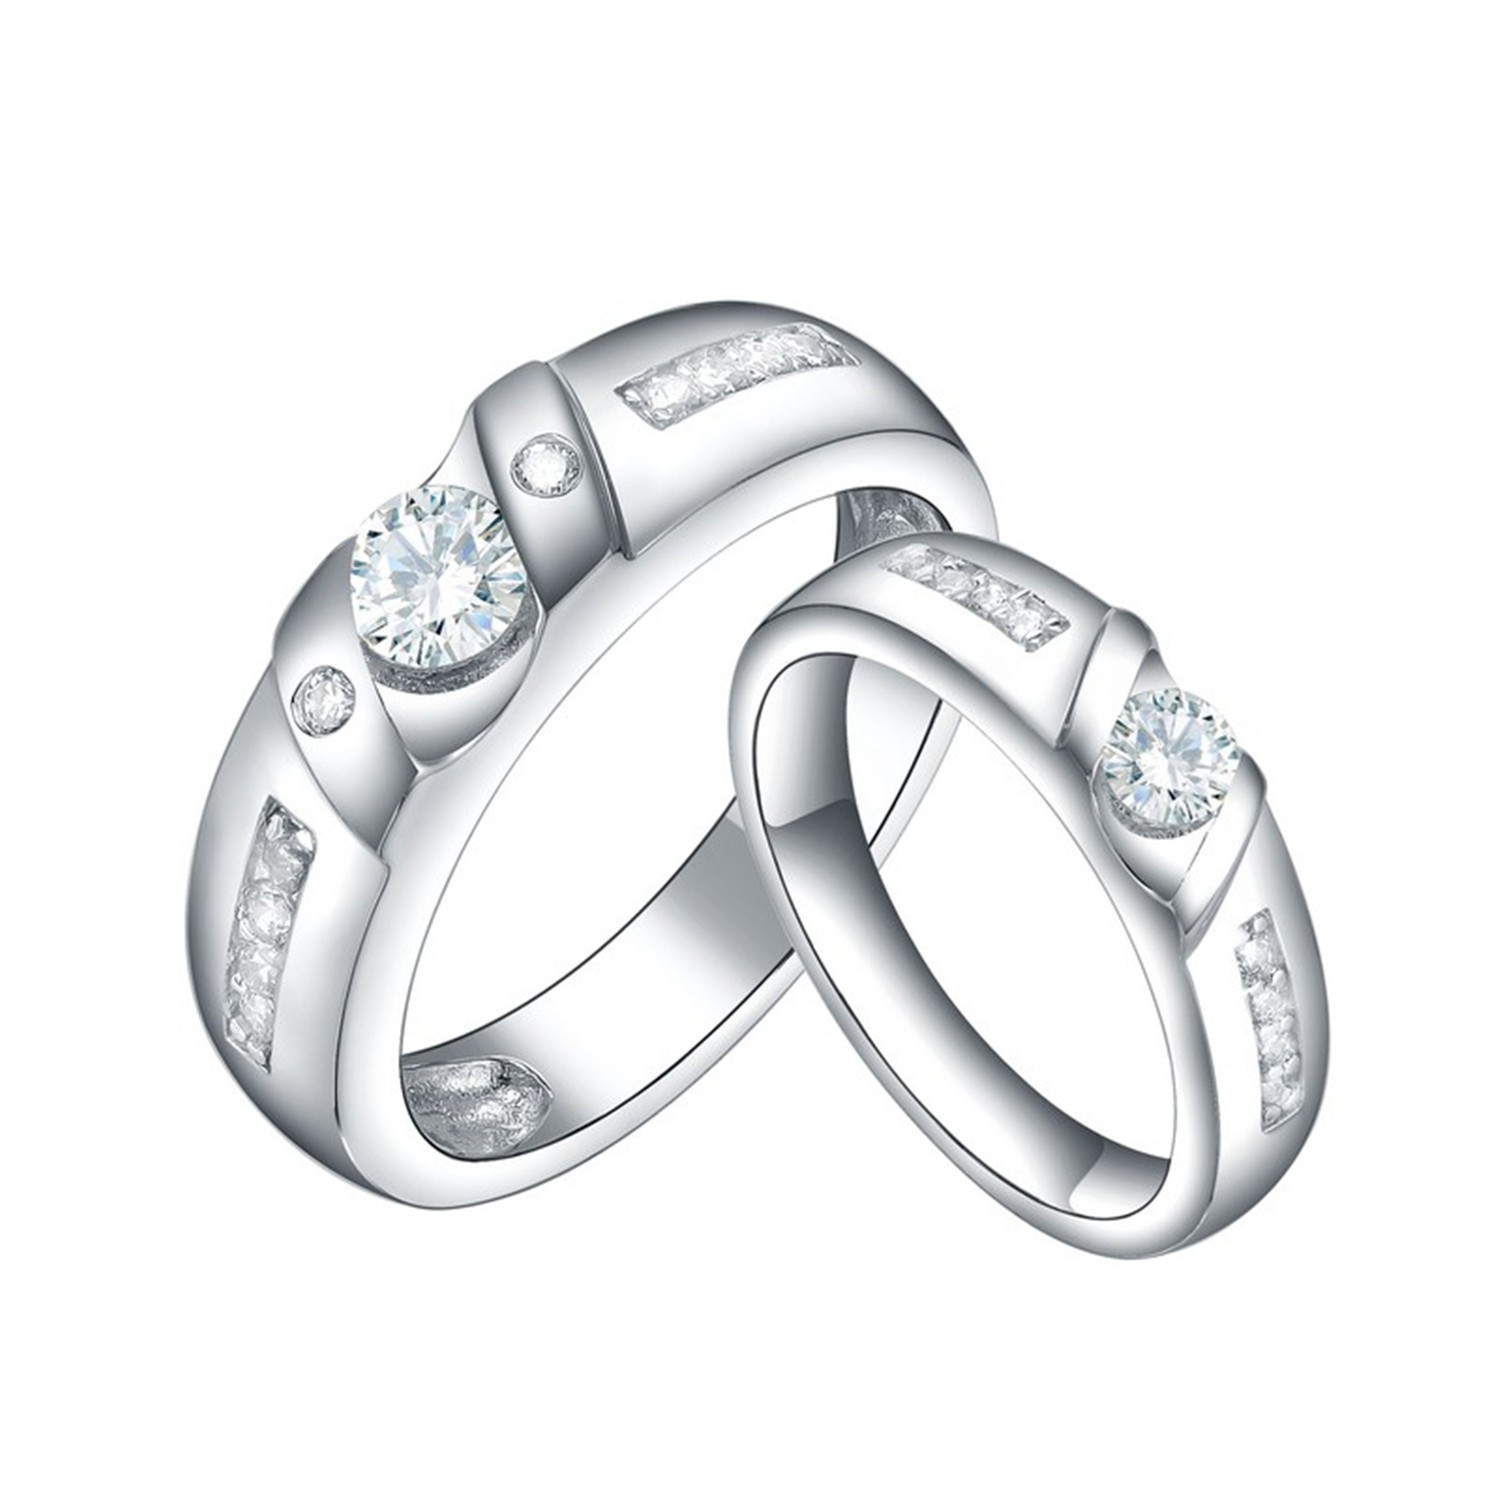 Shine Your Love: Silver Zircon Couple Rings